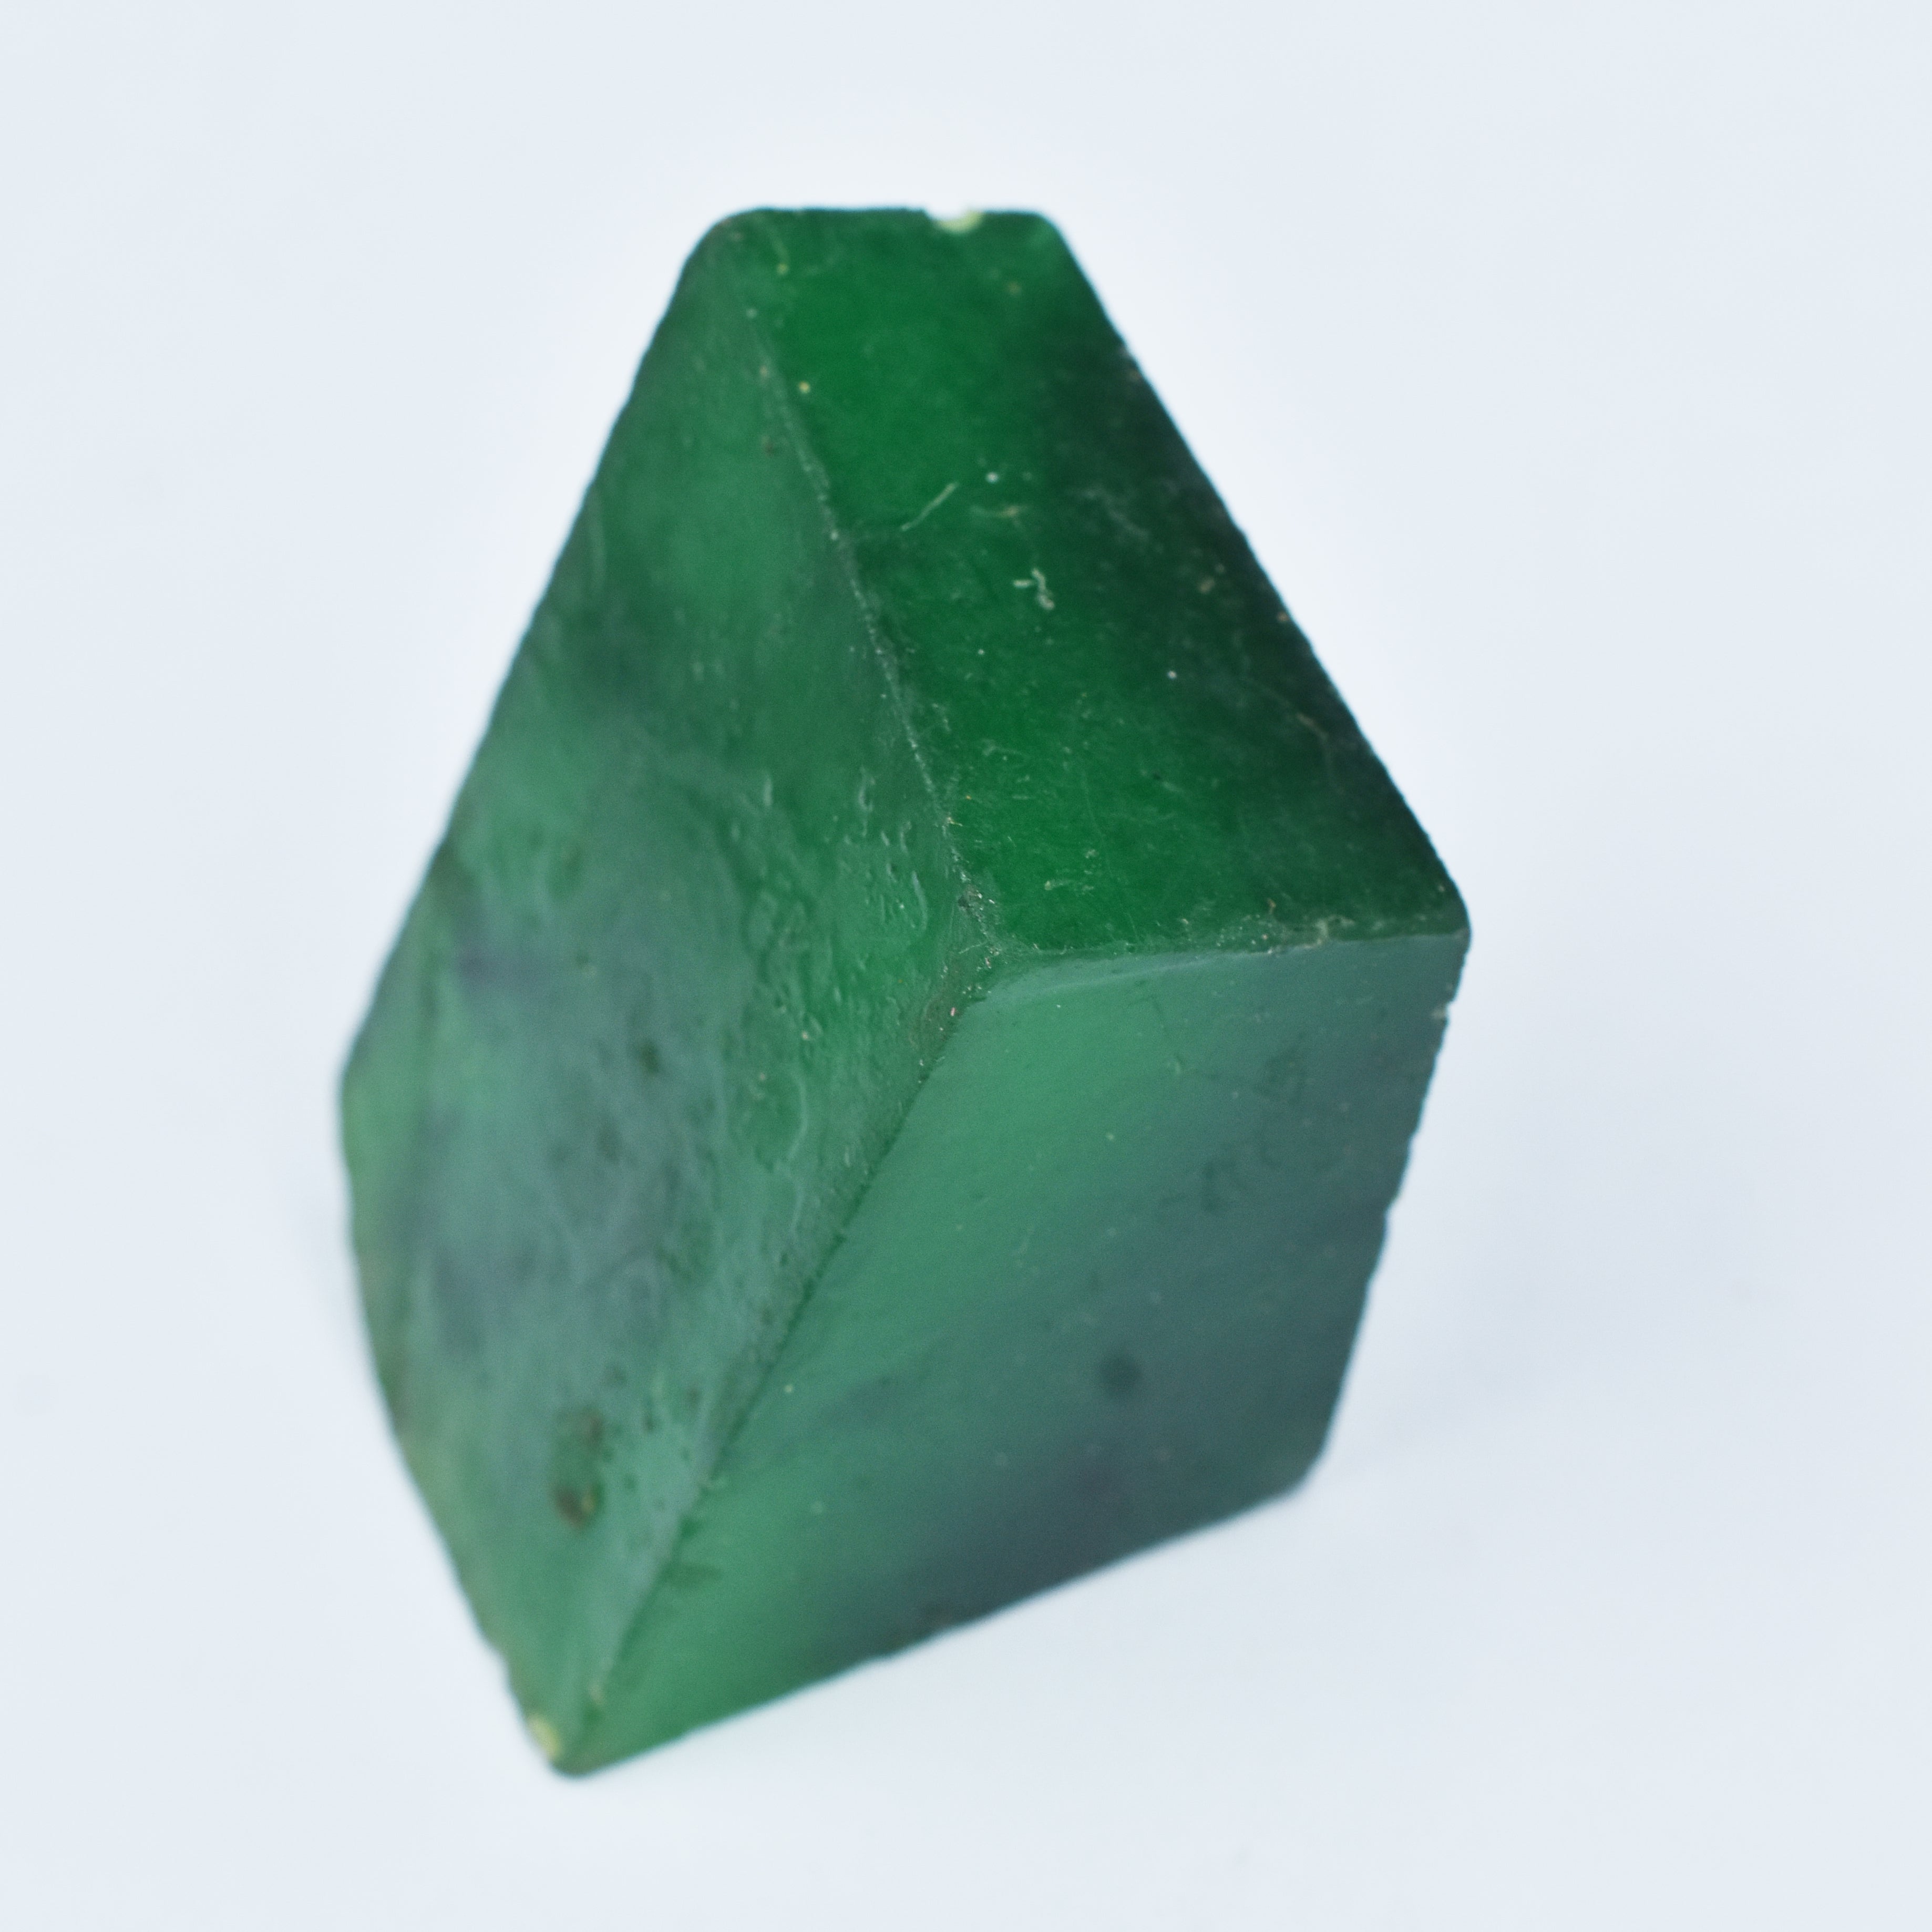 Healing Emerald Uncut Rough Natural 285.90 Carat Green Emerald Rough Loose Gemstone, Emerald Rough From Colombia